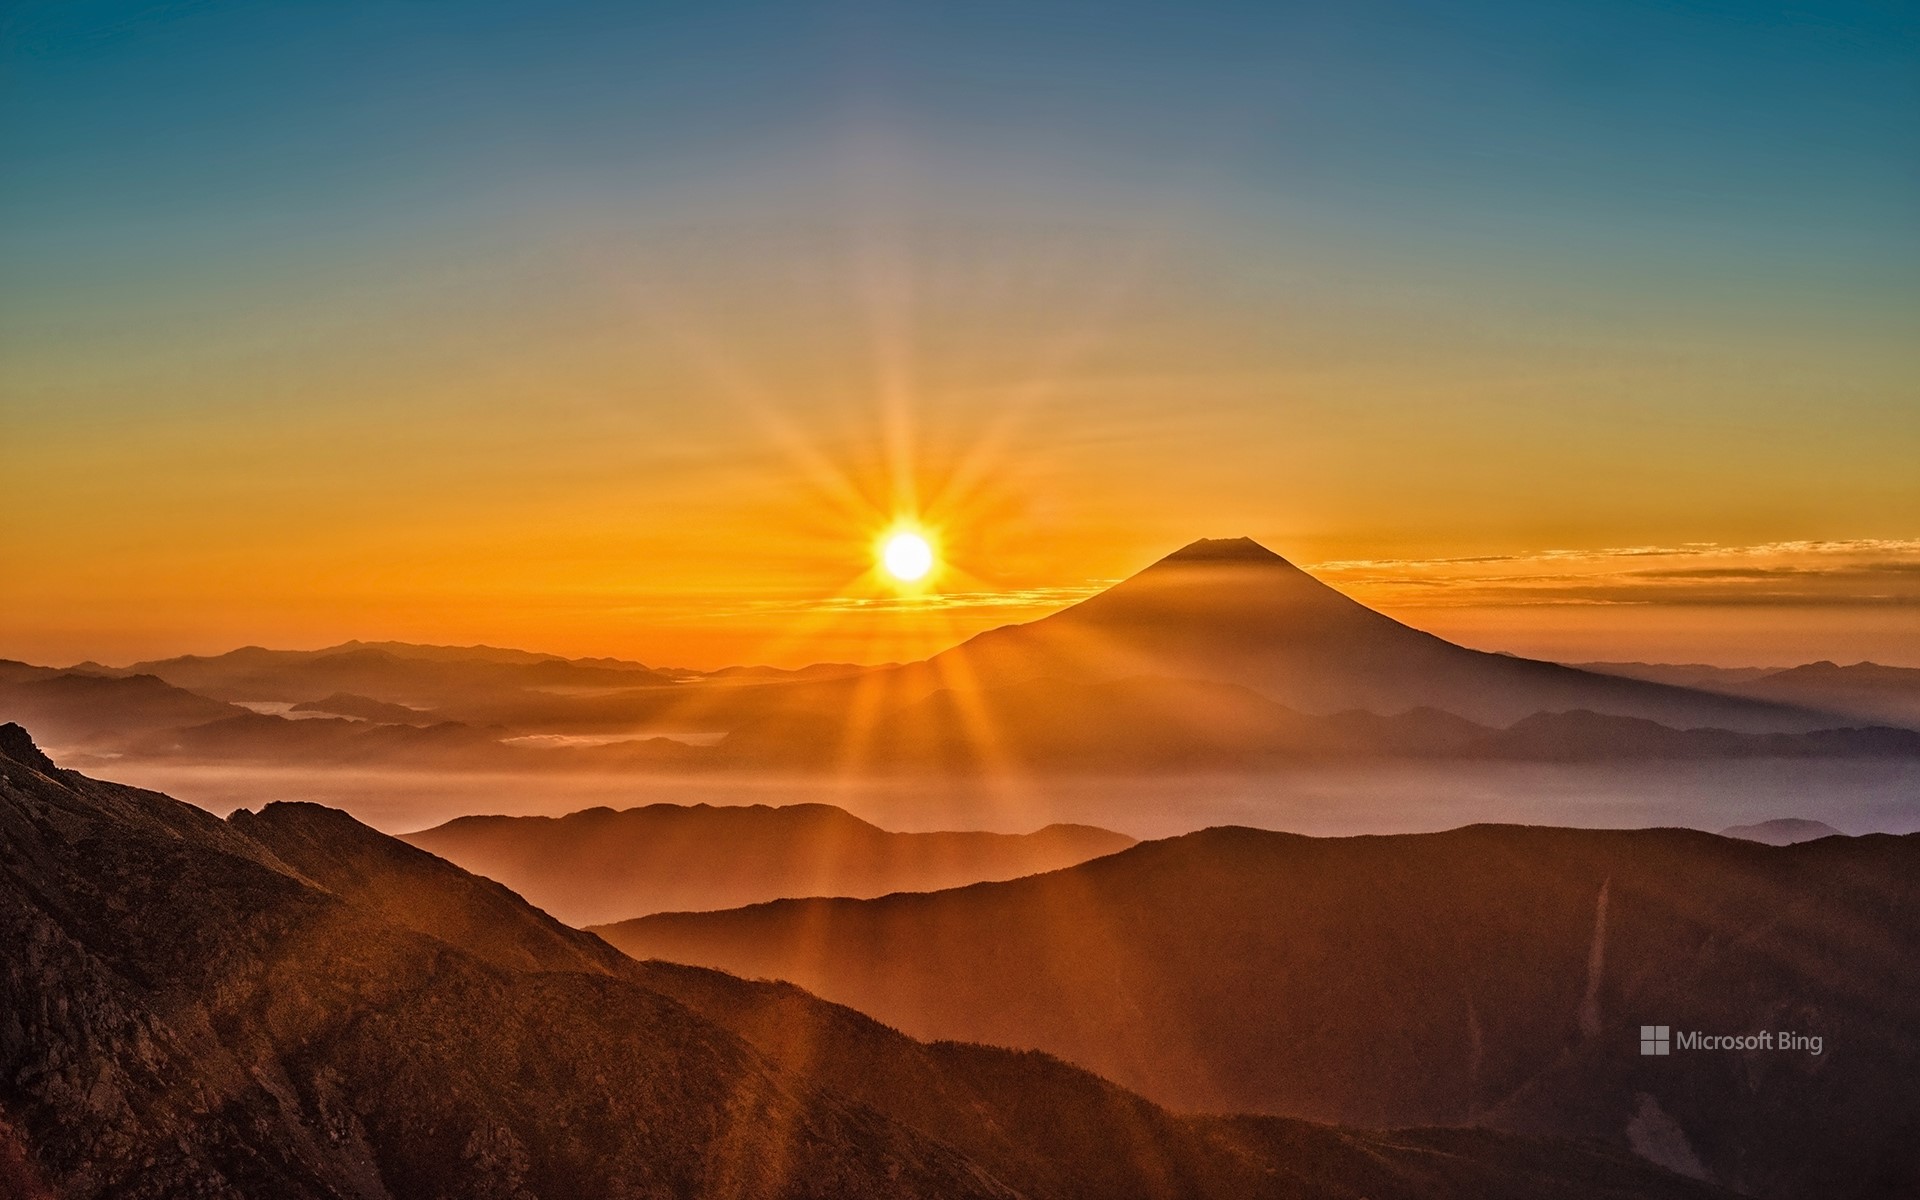 Mount Fuji and sunrise